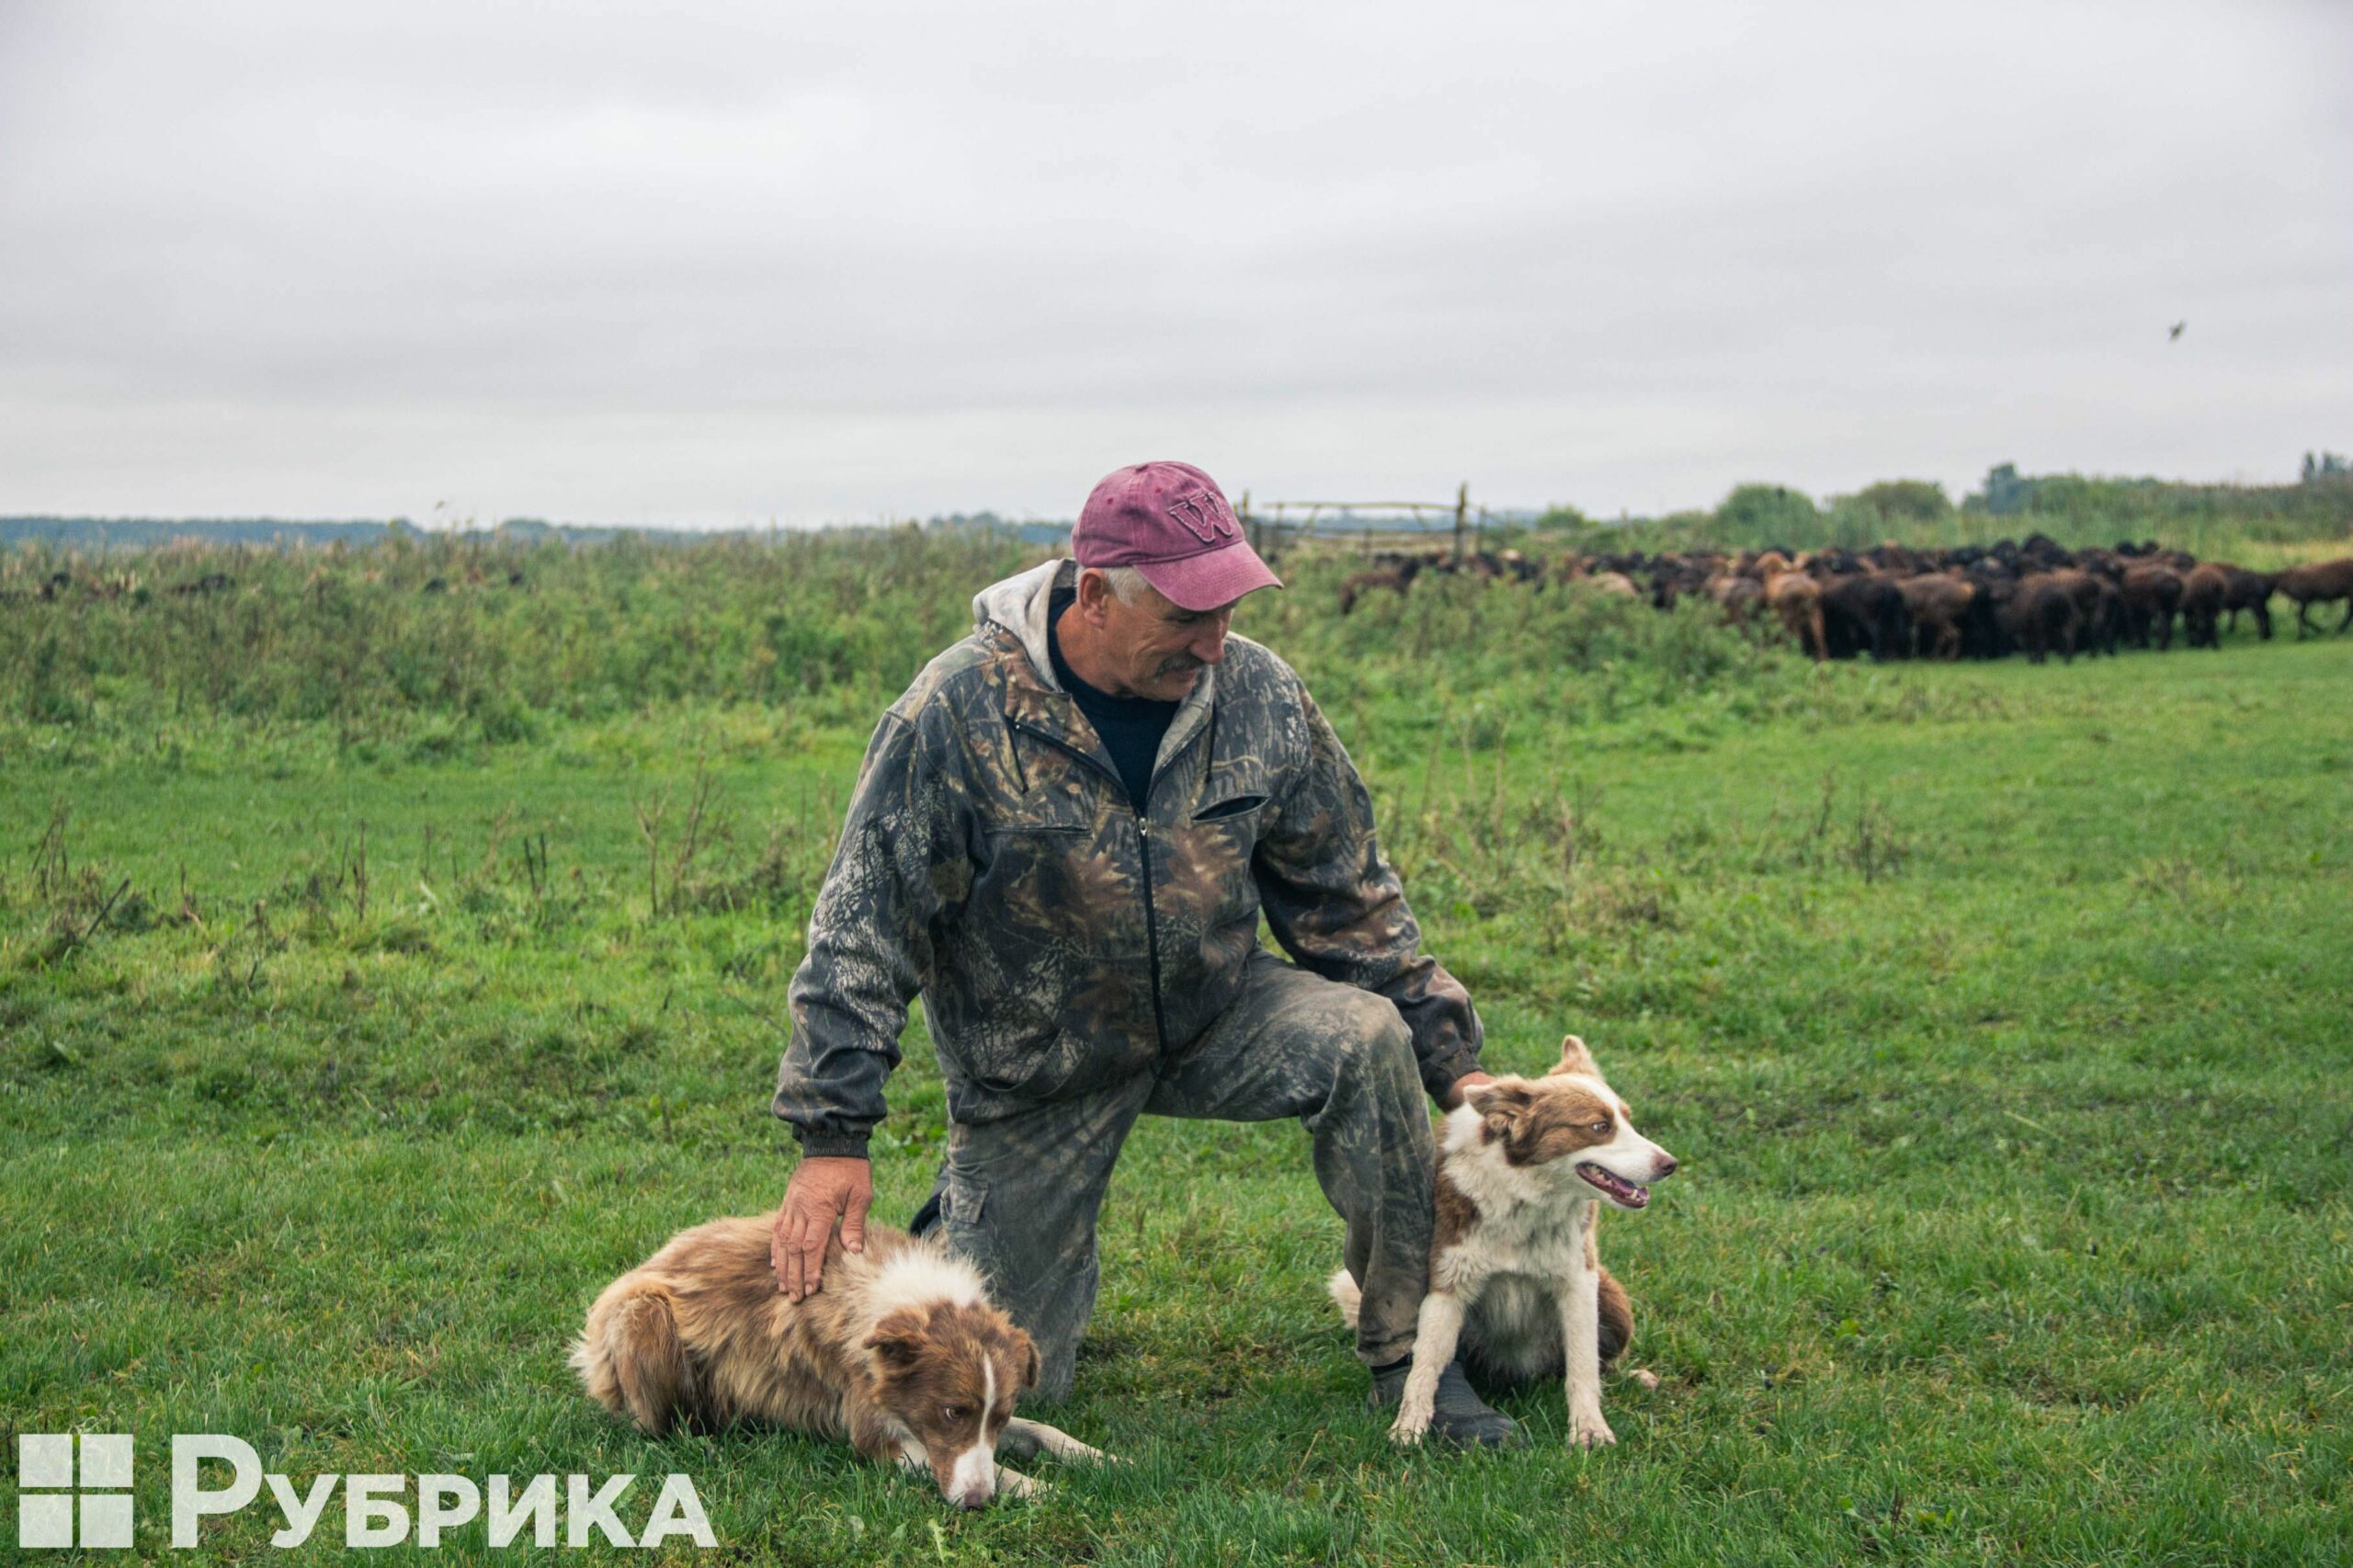 Володимир Альохін — український фермер з Донеччини